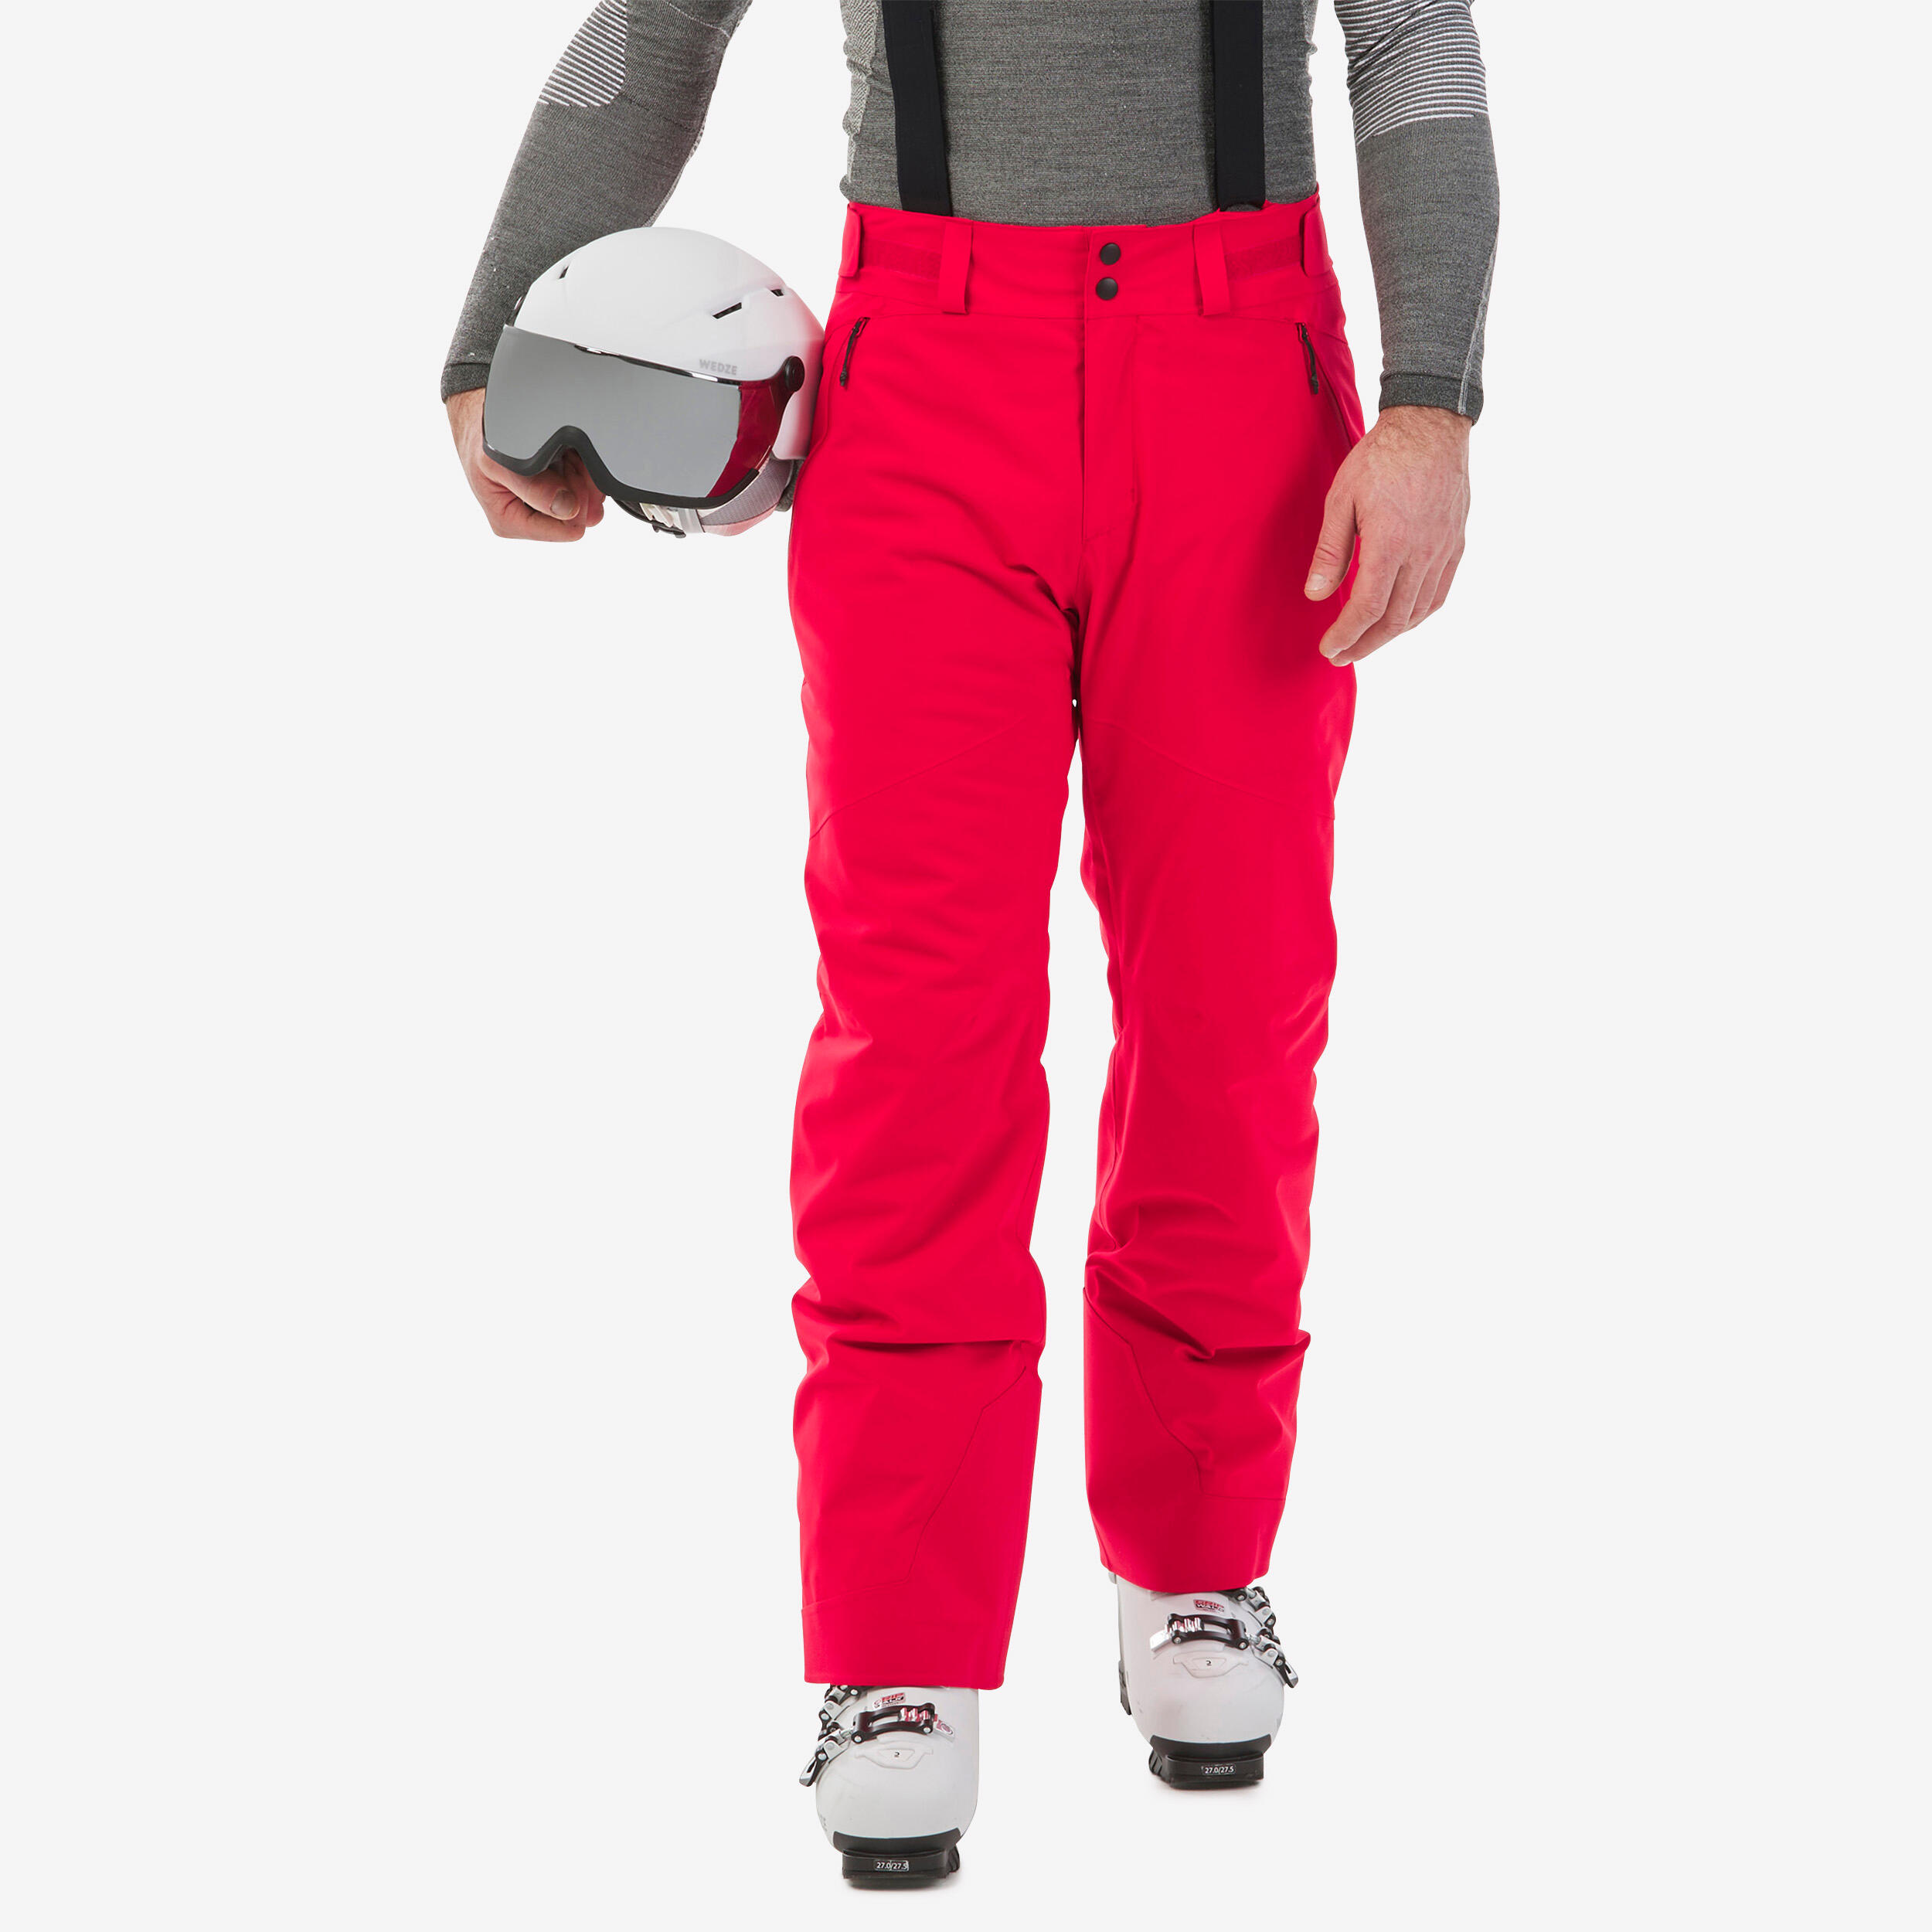 Men's Warm Ski Trousers - 580 - Red 1/11